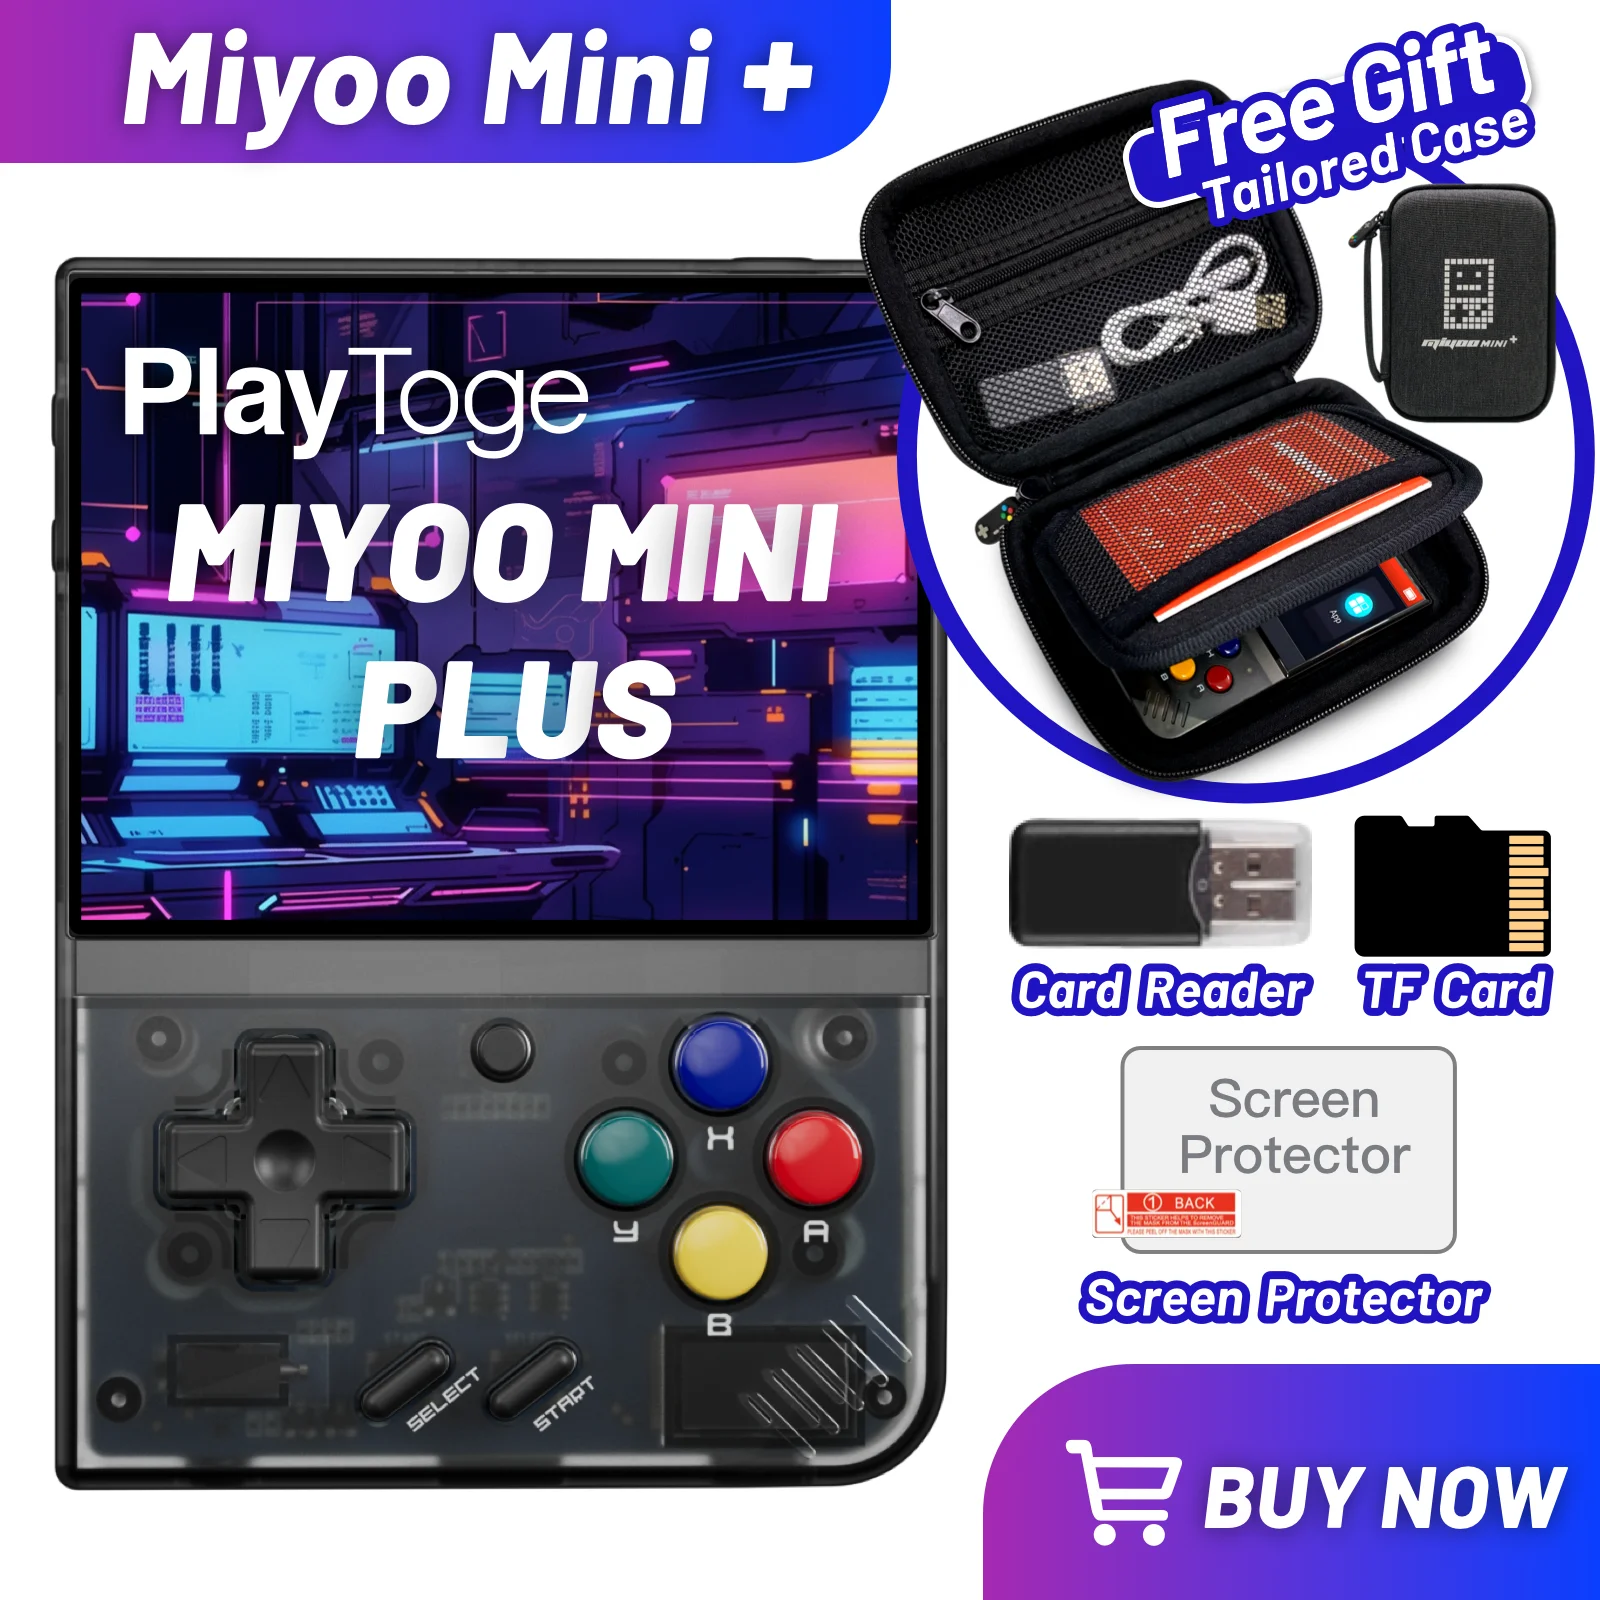 Miyoo Mini Plus Handheld Game Console, 3.5 Inch IPS 640x480 Screen, Support External TF Card, 3000mAh Battery